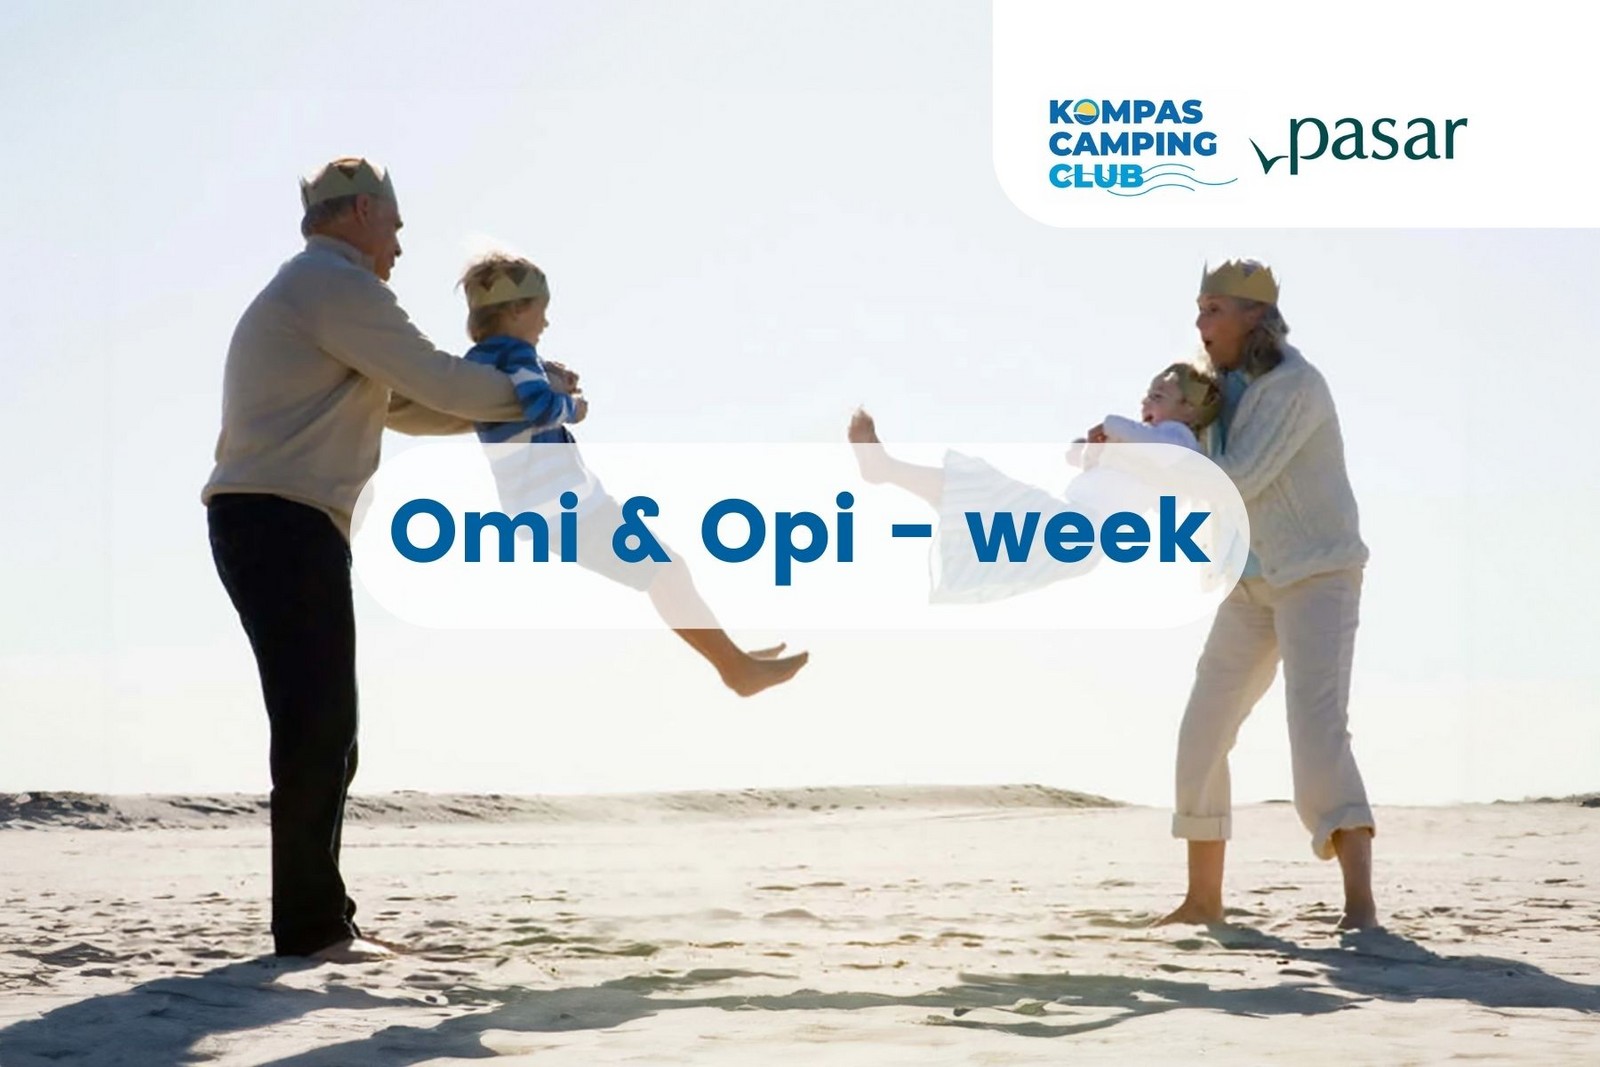 OMI & OPI week - Kamperen - Pasar & Kompas Camping Club